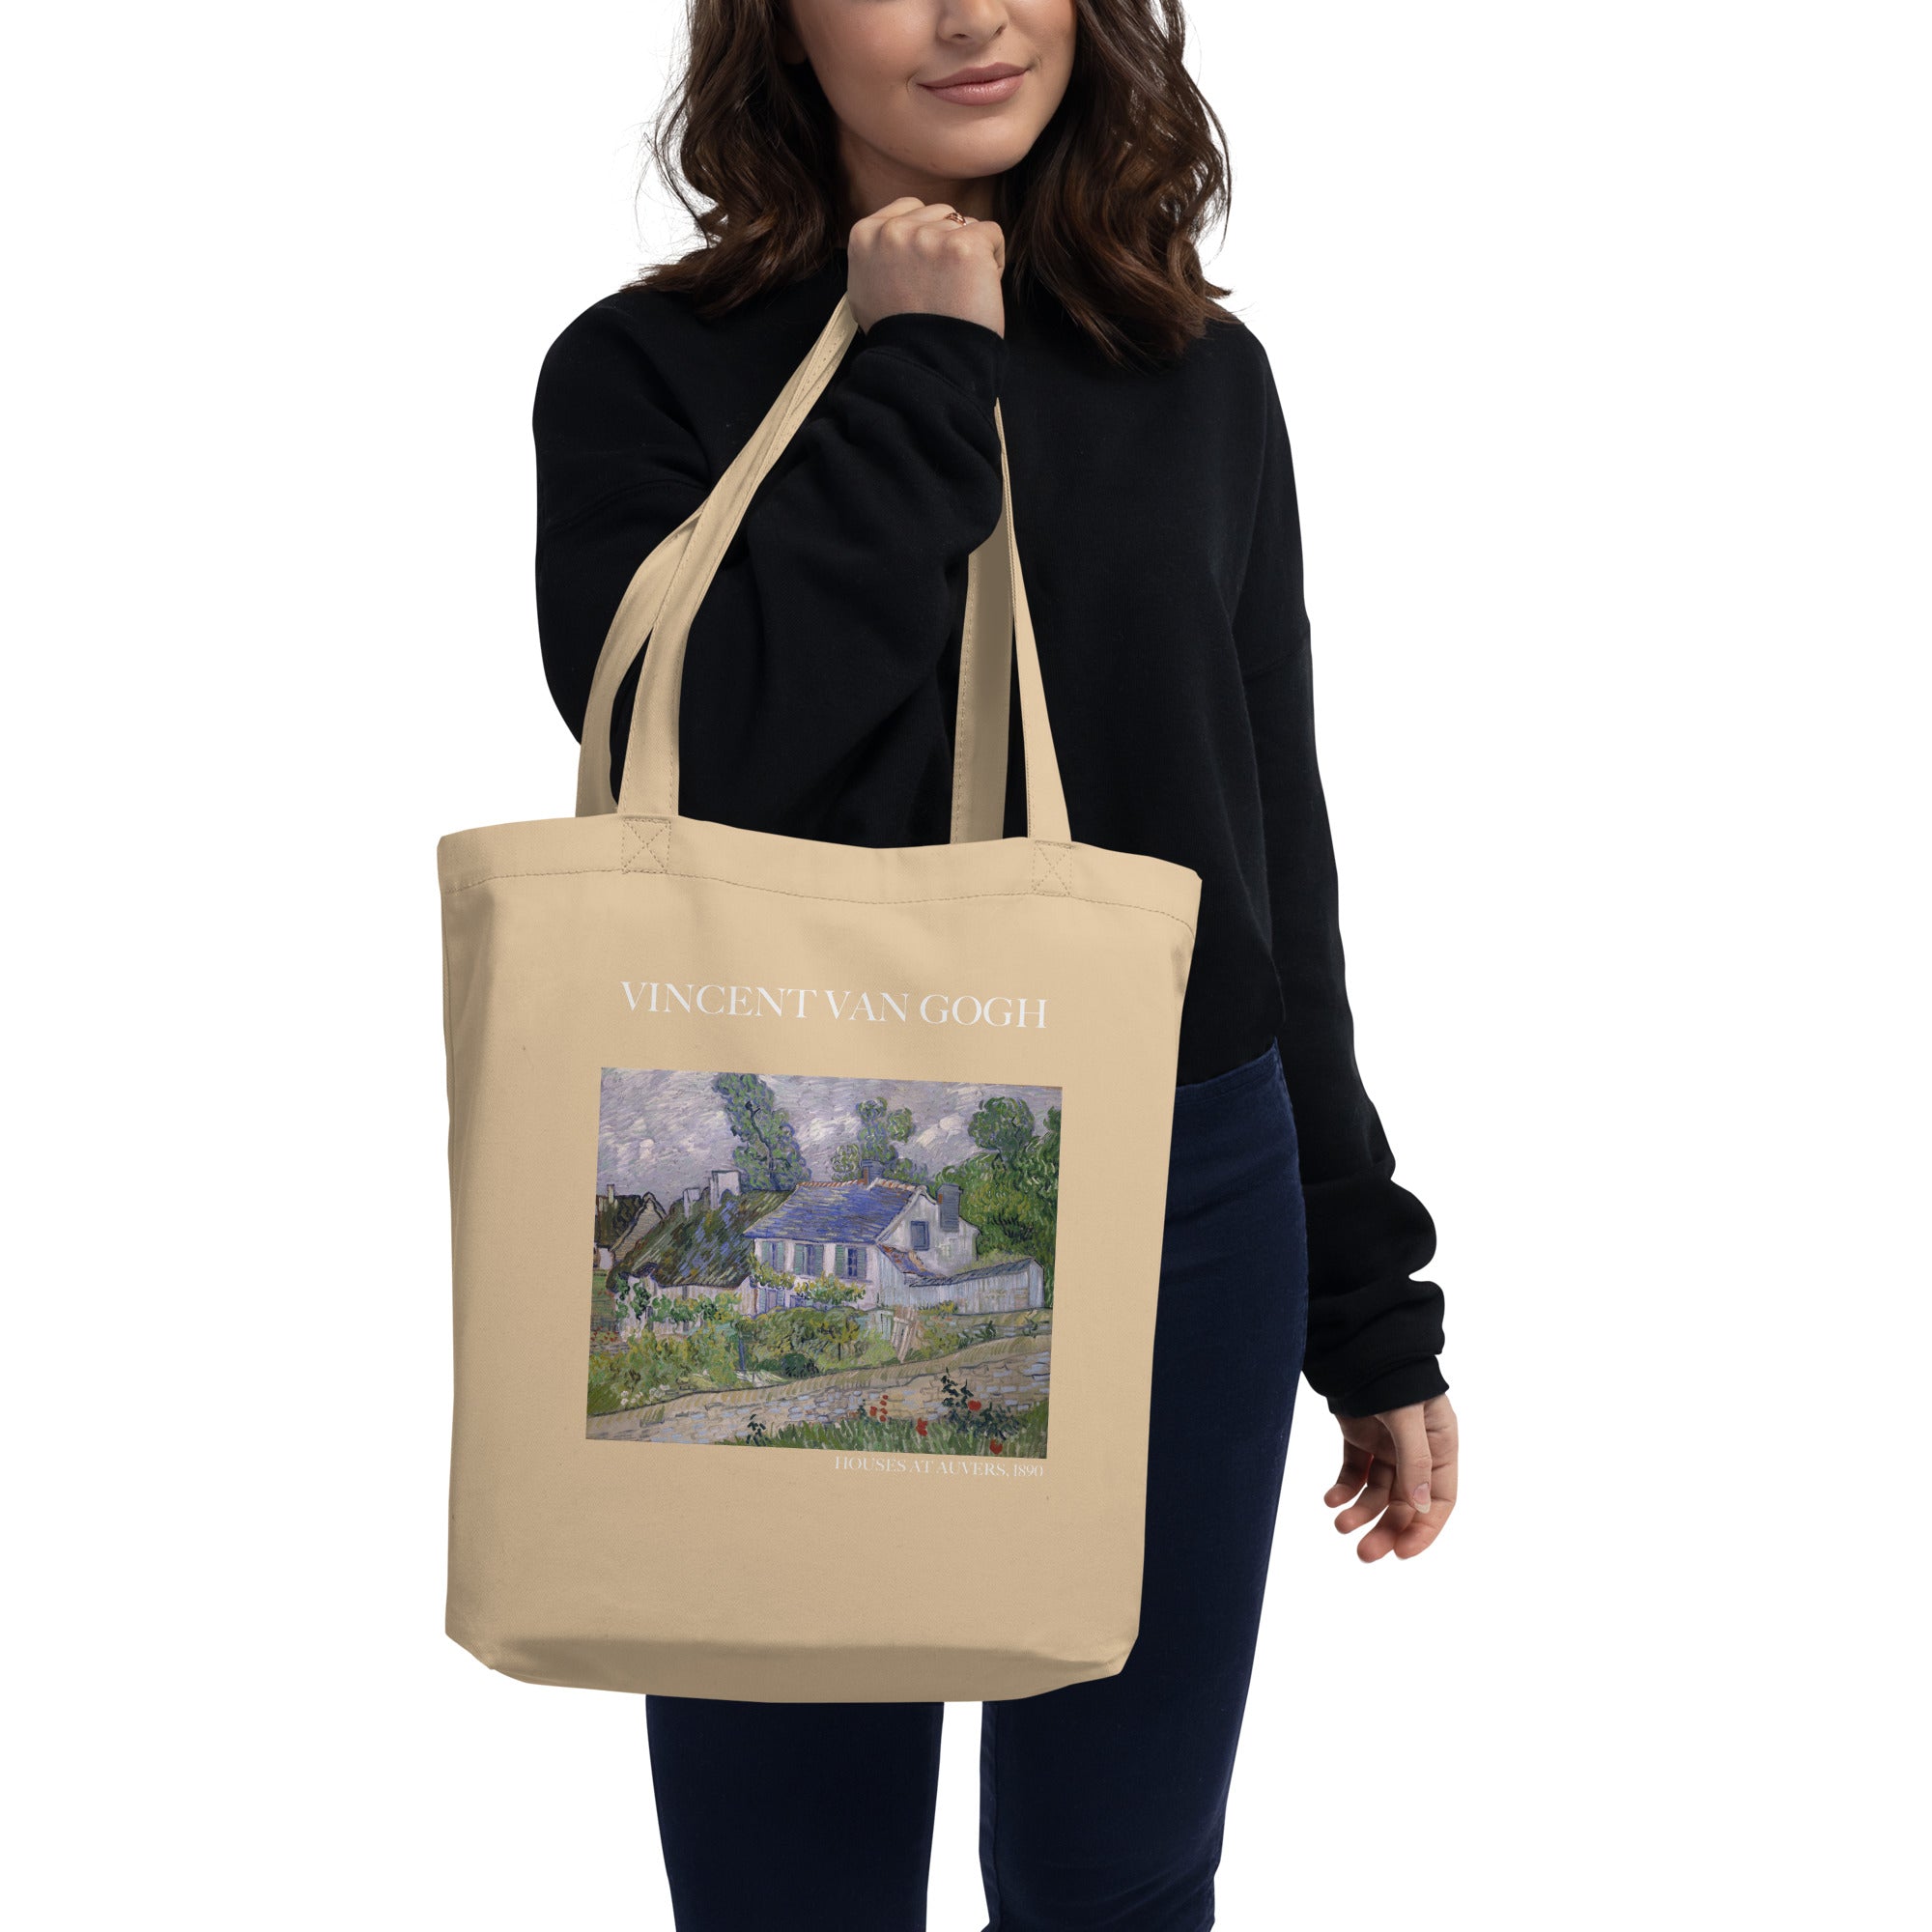 Vincent van Gogh 'Houses at Auvers' Famous Painting Totebag | Eco Friendly Art Tote Bag